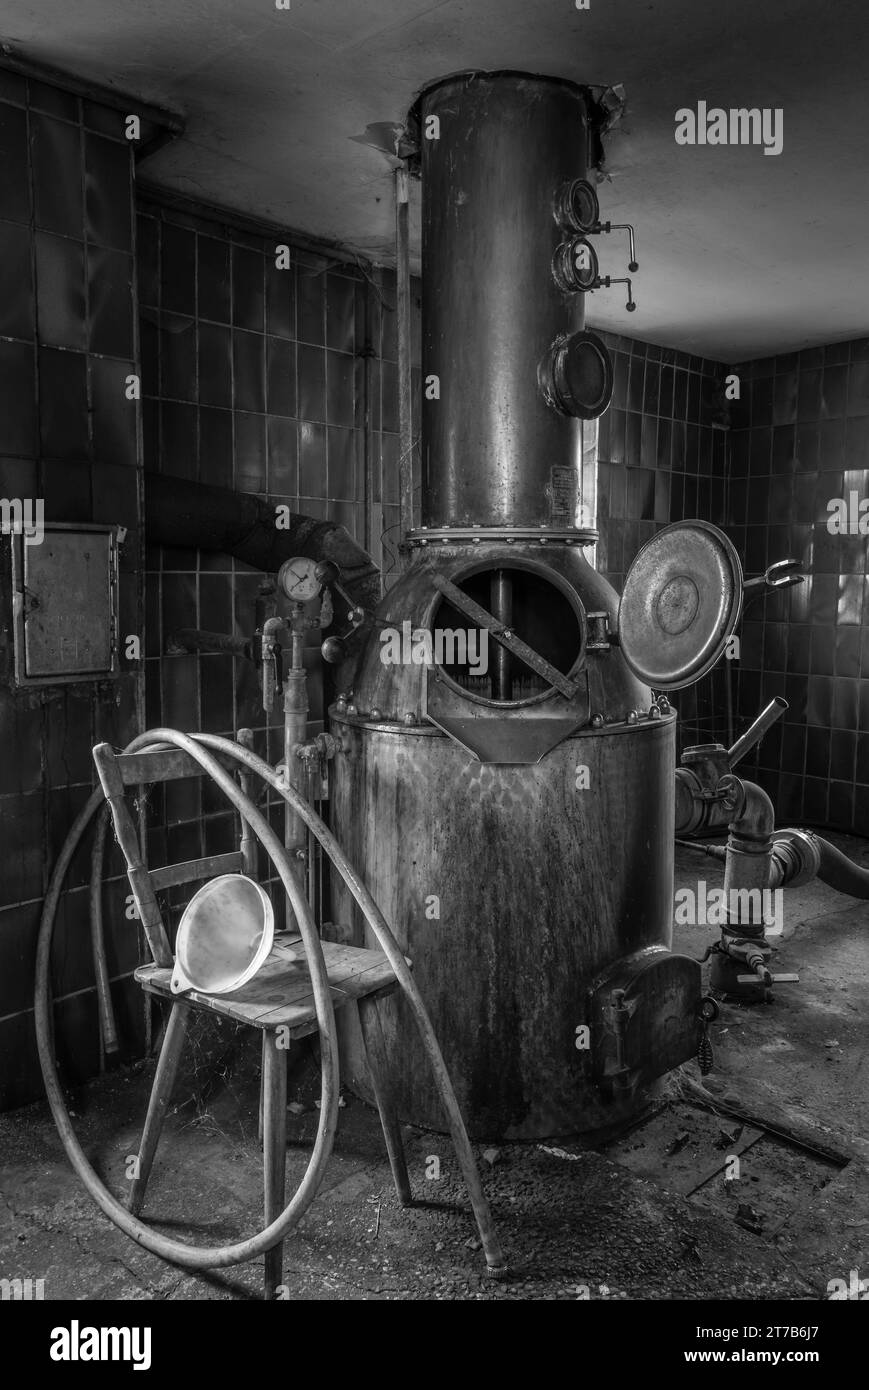 Abandoned spirit distilling equipment. Stock Photo